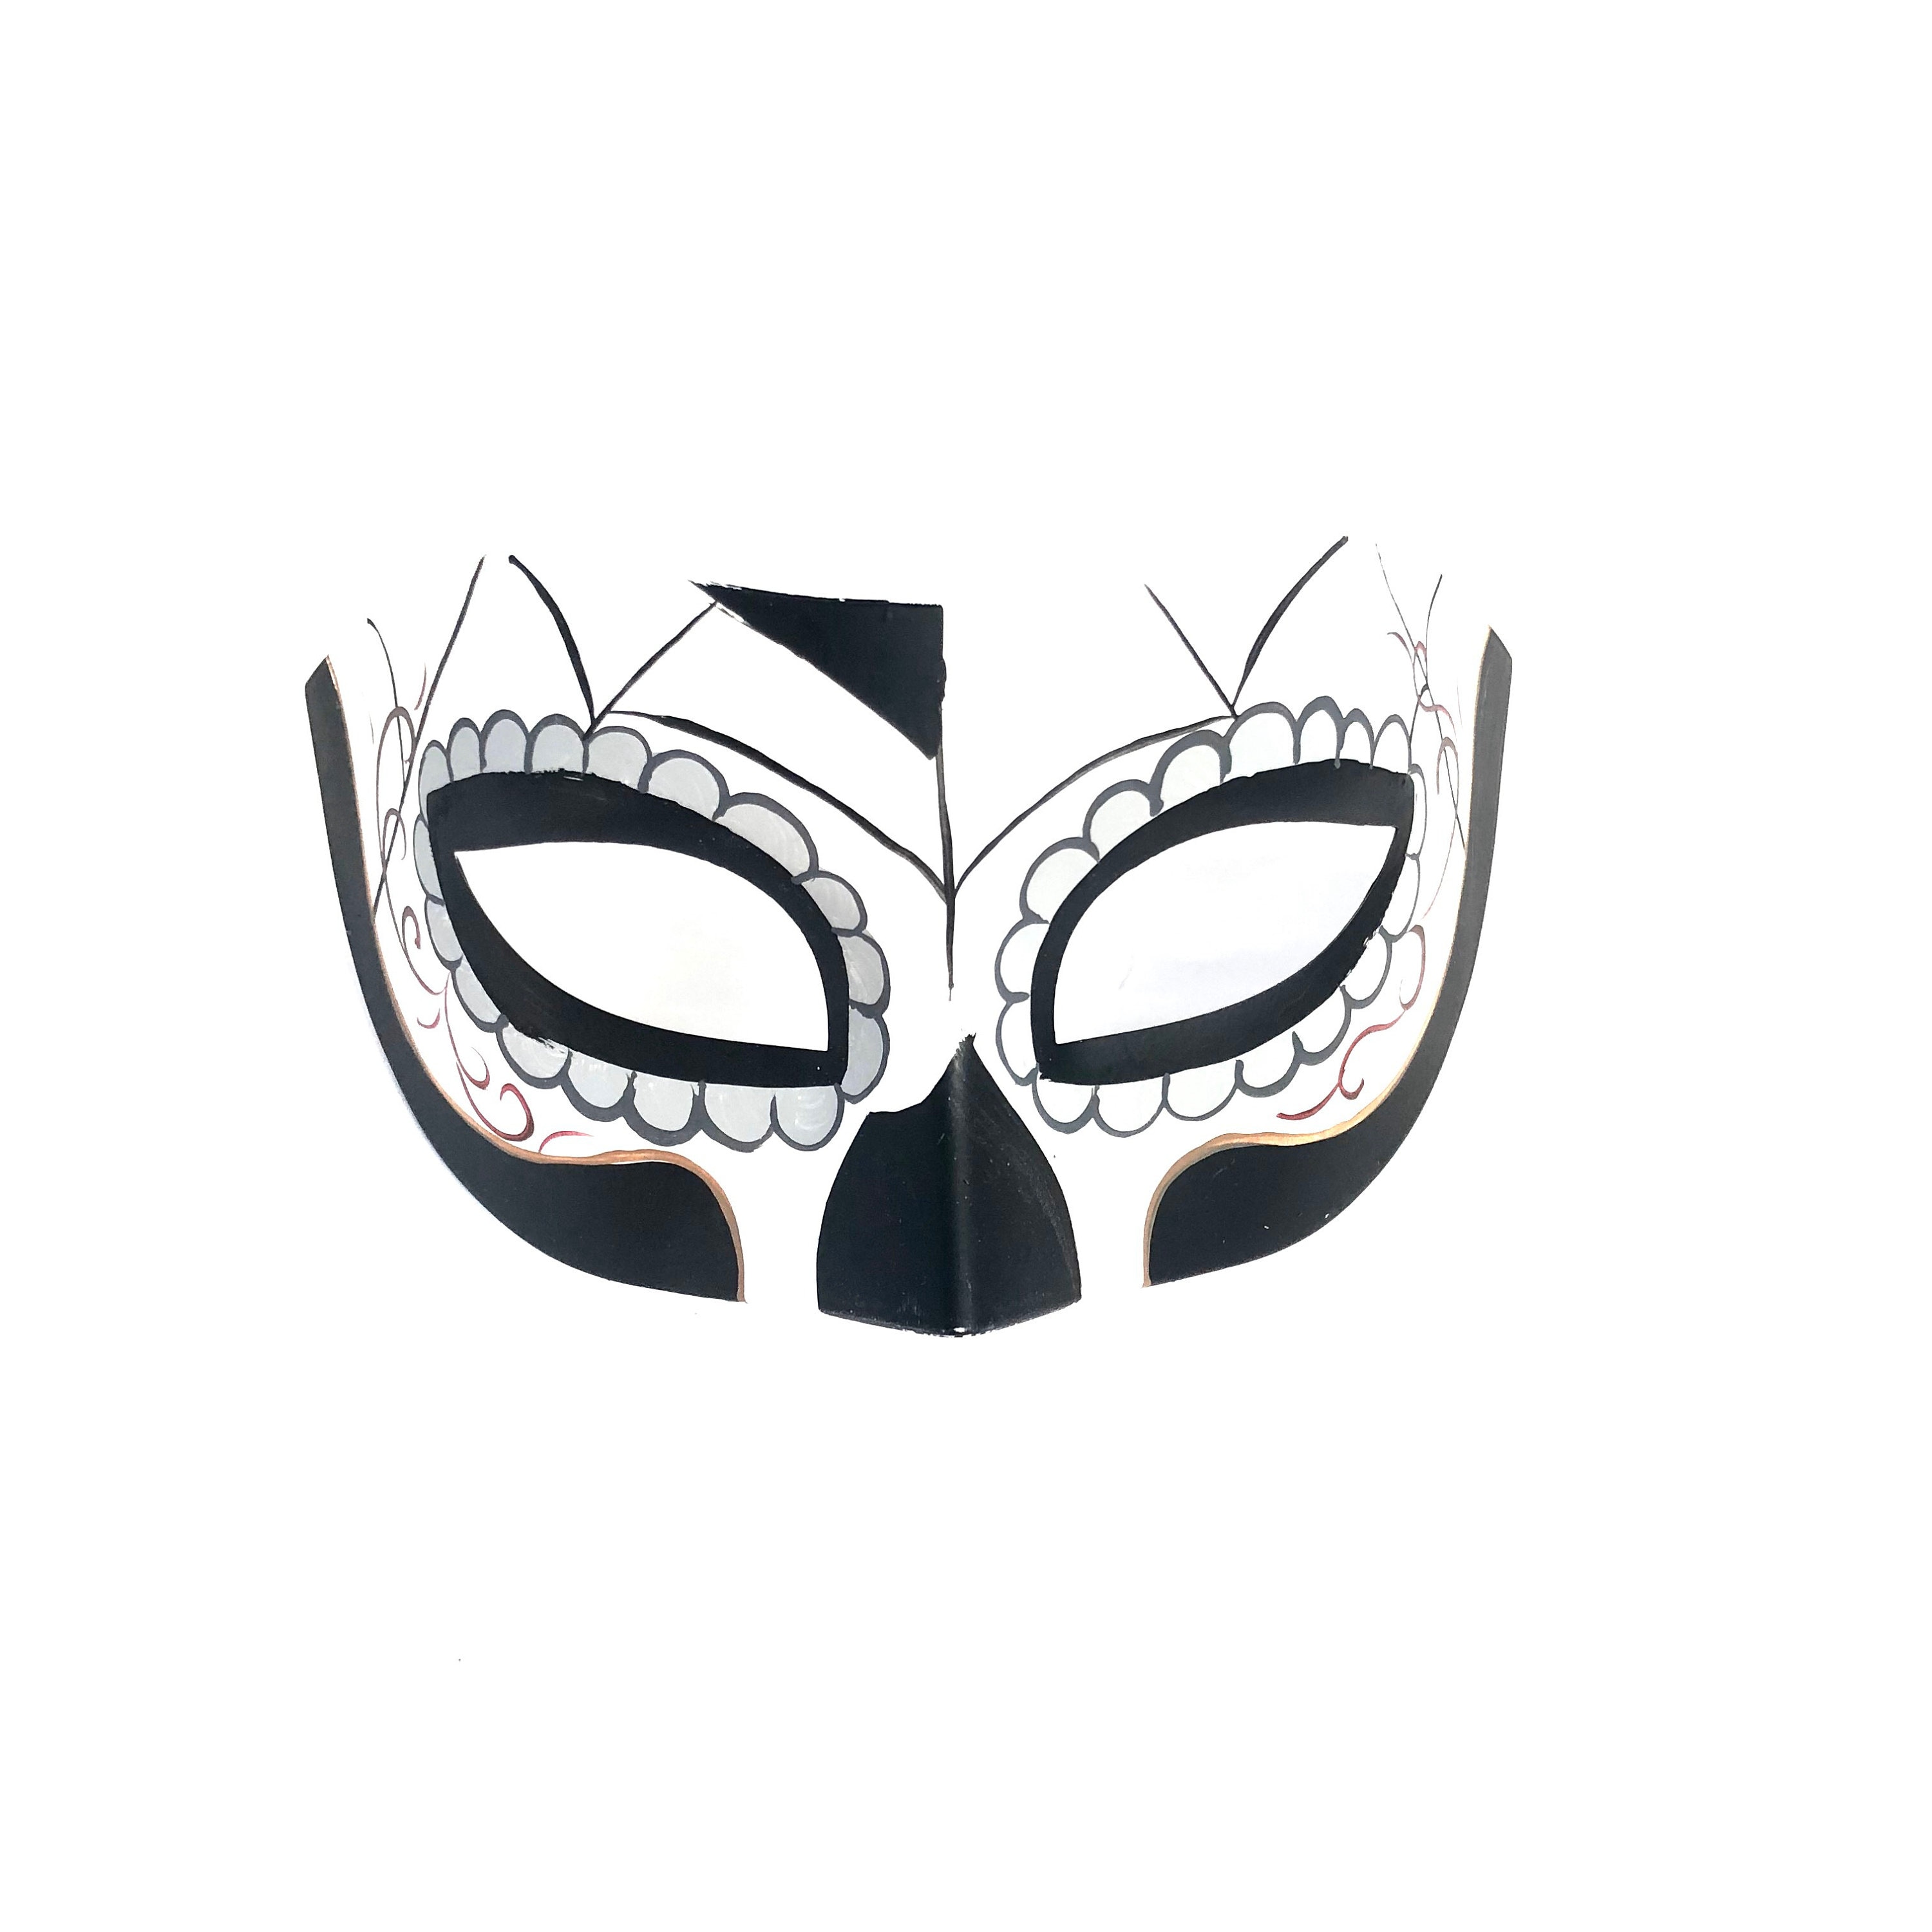 Cat Masquerade Masks Gatto Cat Day of The Dead Mask | Dia de Los Muertos Masquerade Mask M9461 Black by Beyond Masquerade